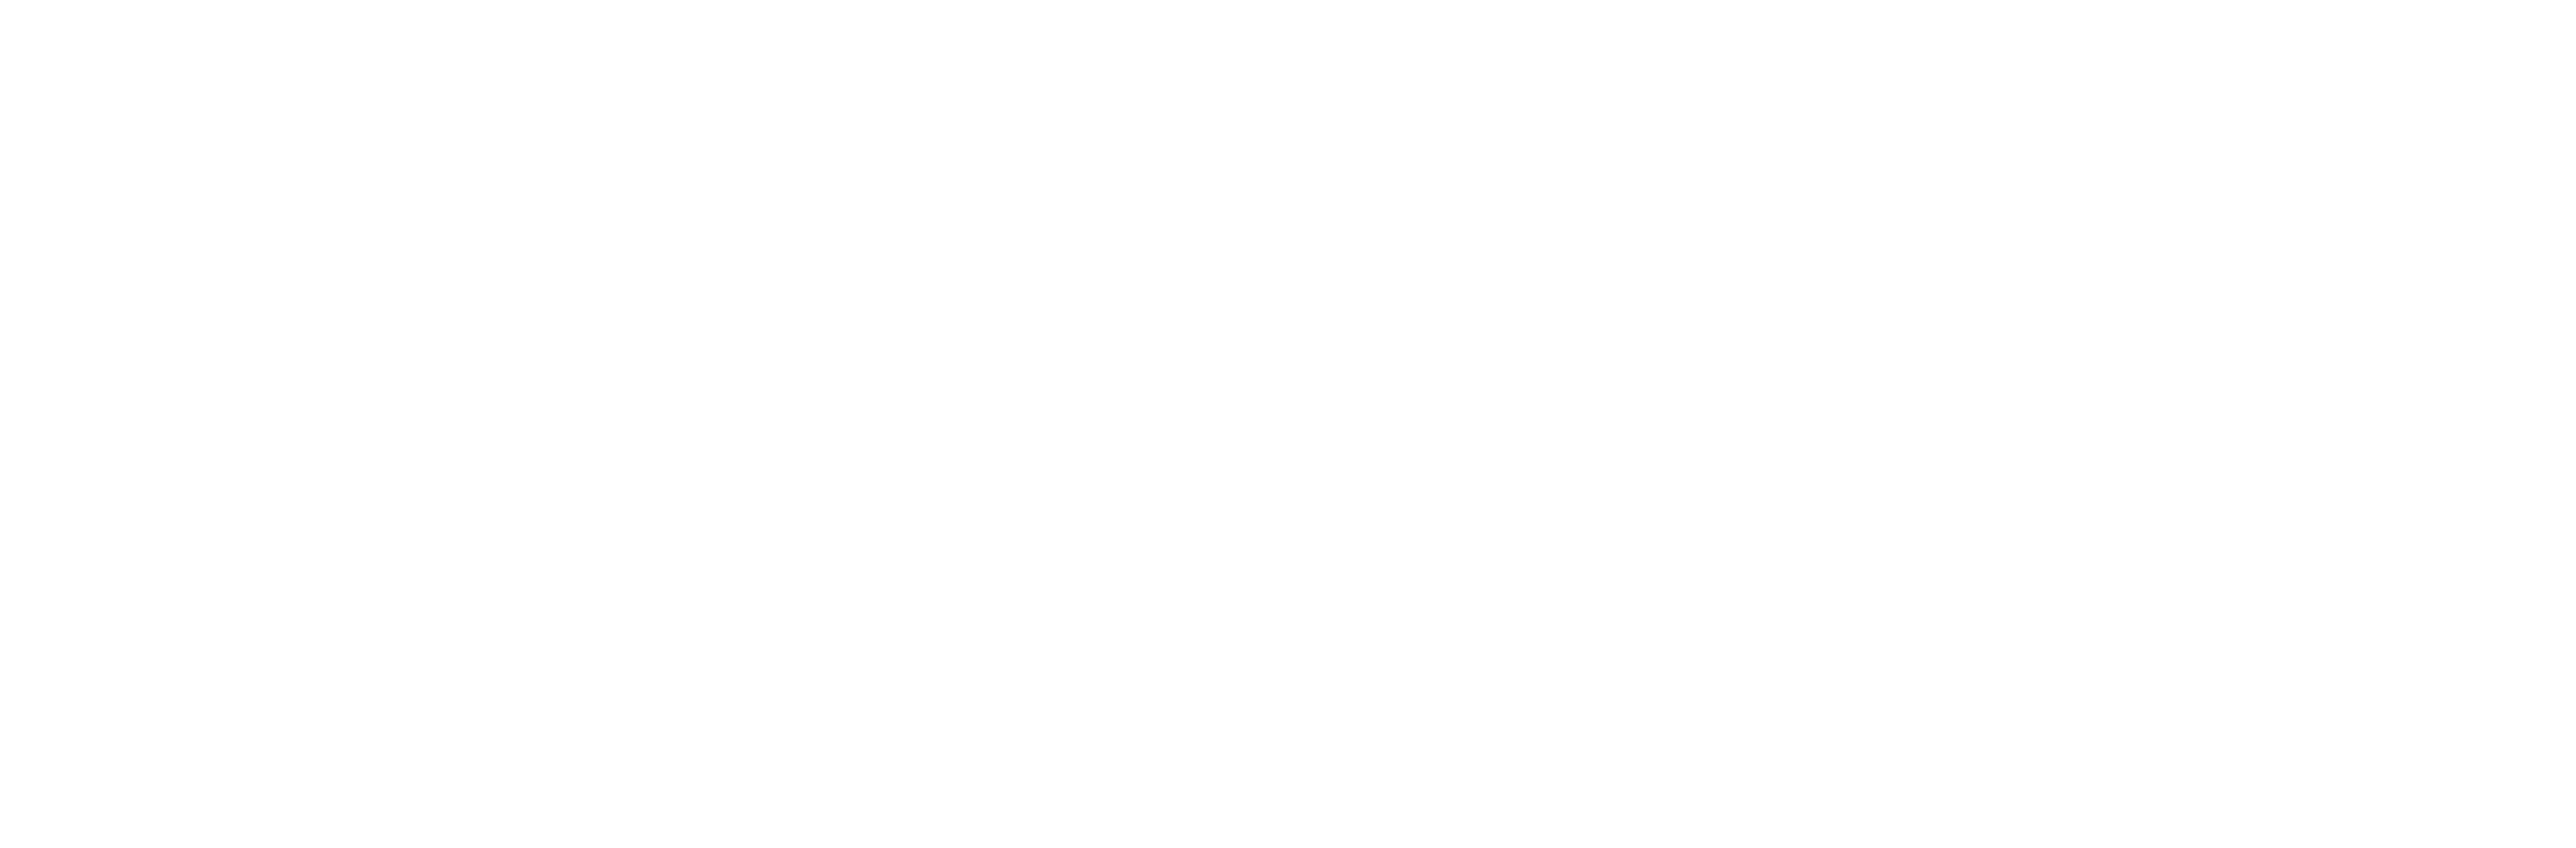 john holland logo